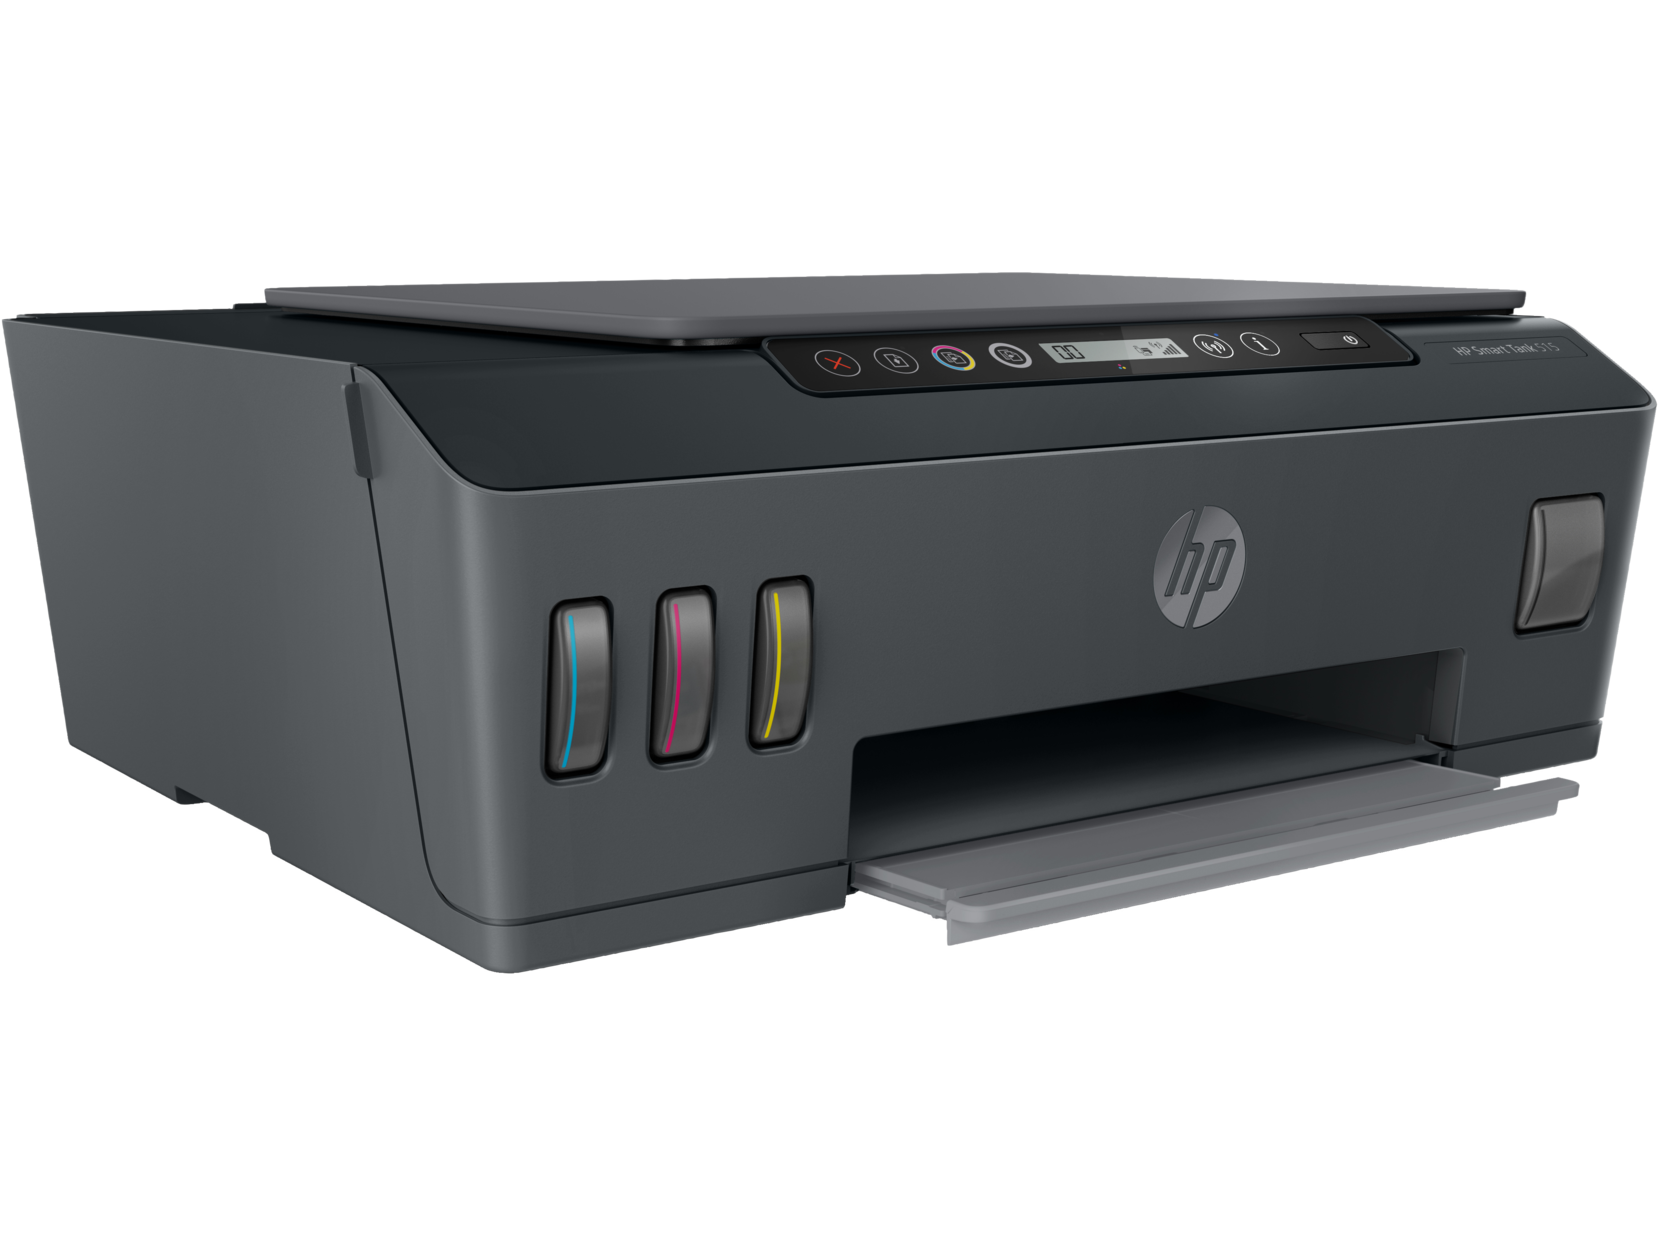 HP Smart Tank 515 Wireless All-in-One  Printer